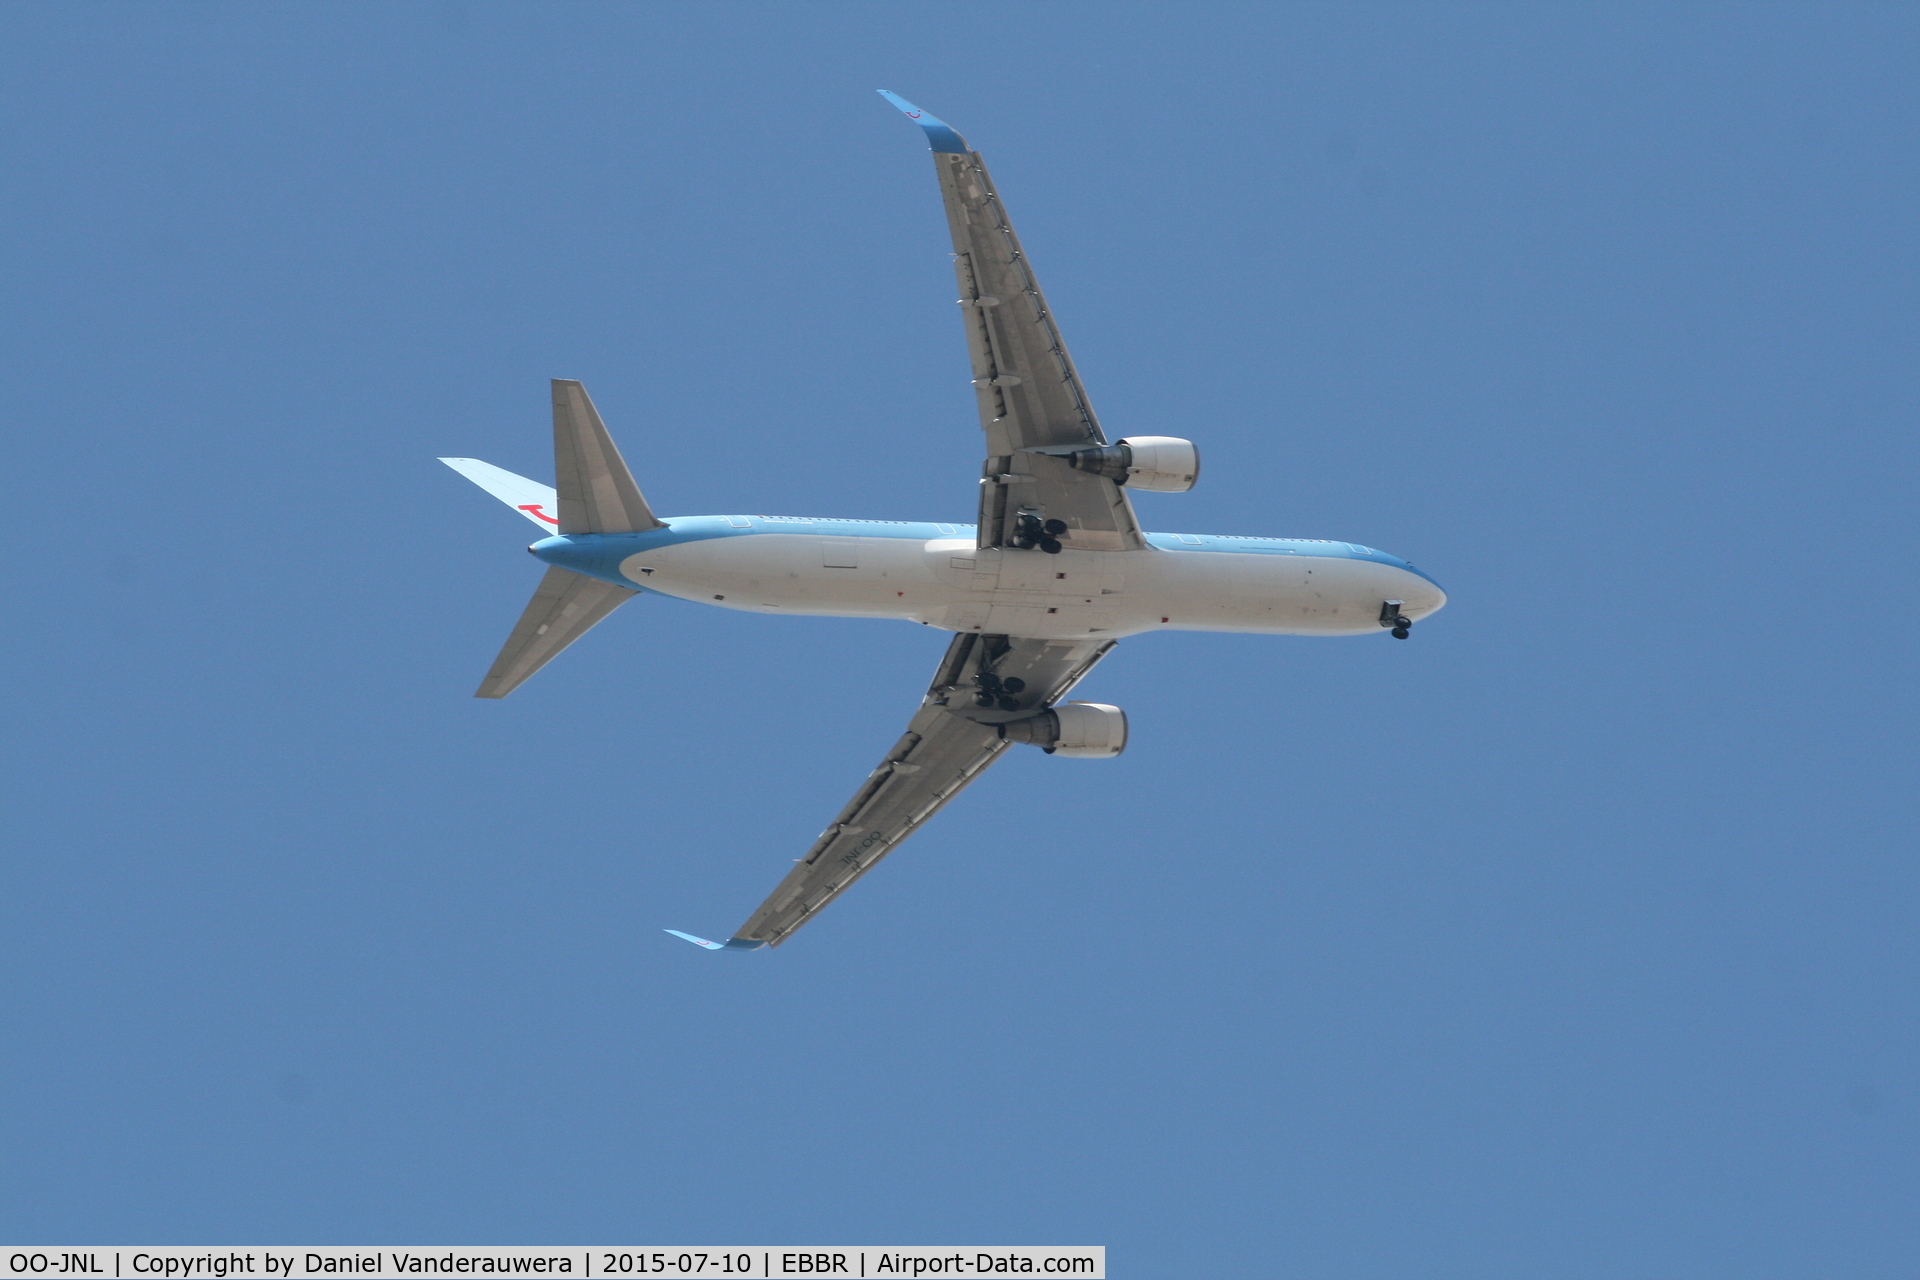 OO-JNL, 2000 Boeing 767-304 C/N 29384, Flight JAF5052 on approach to RWY 07